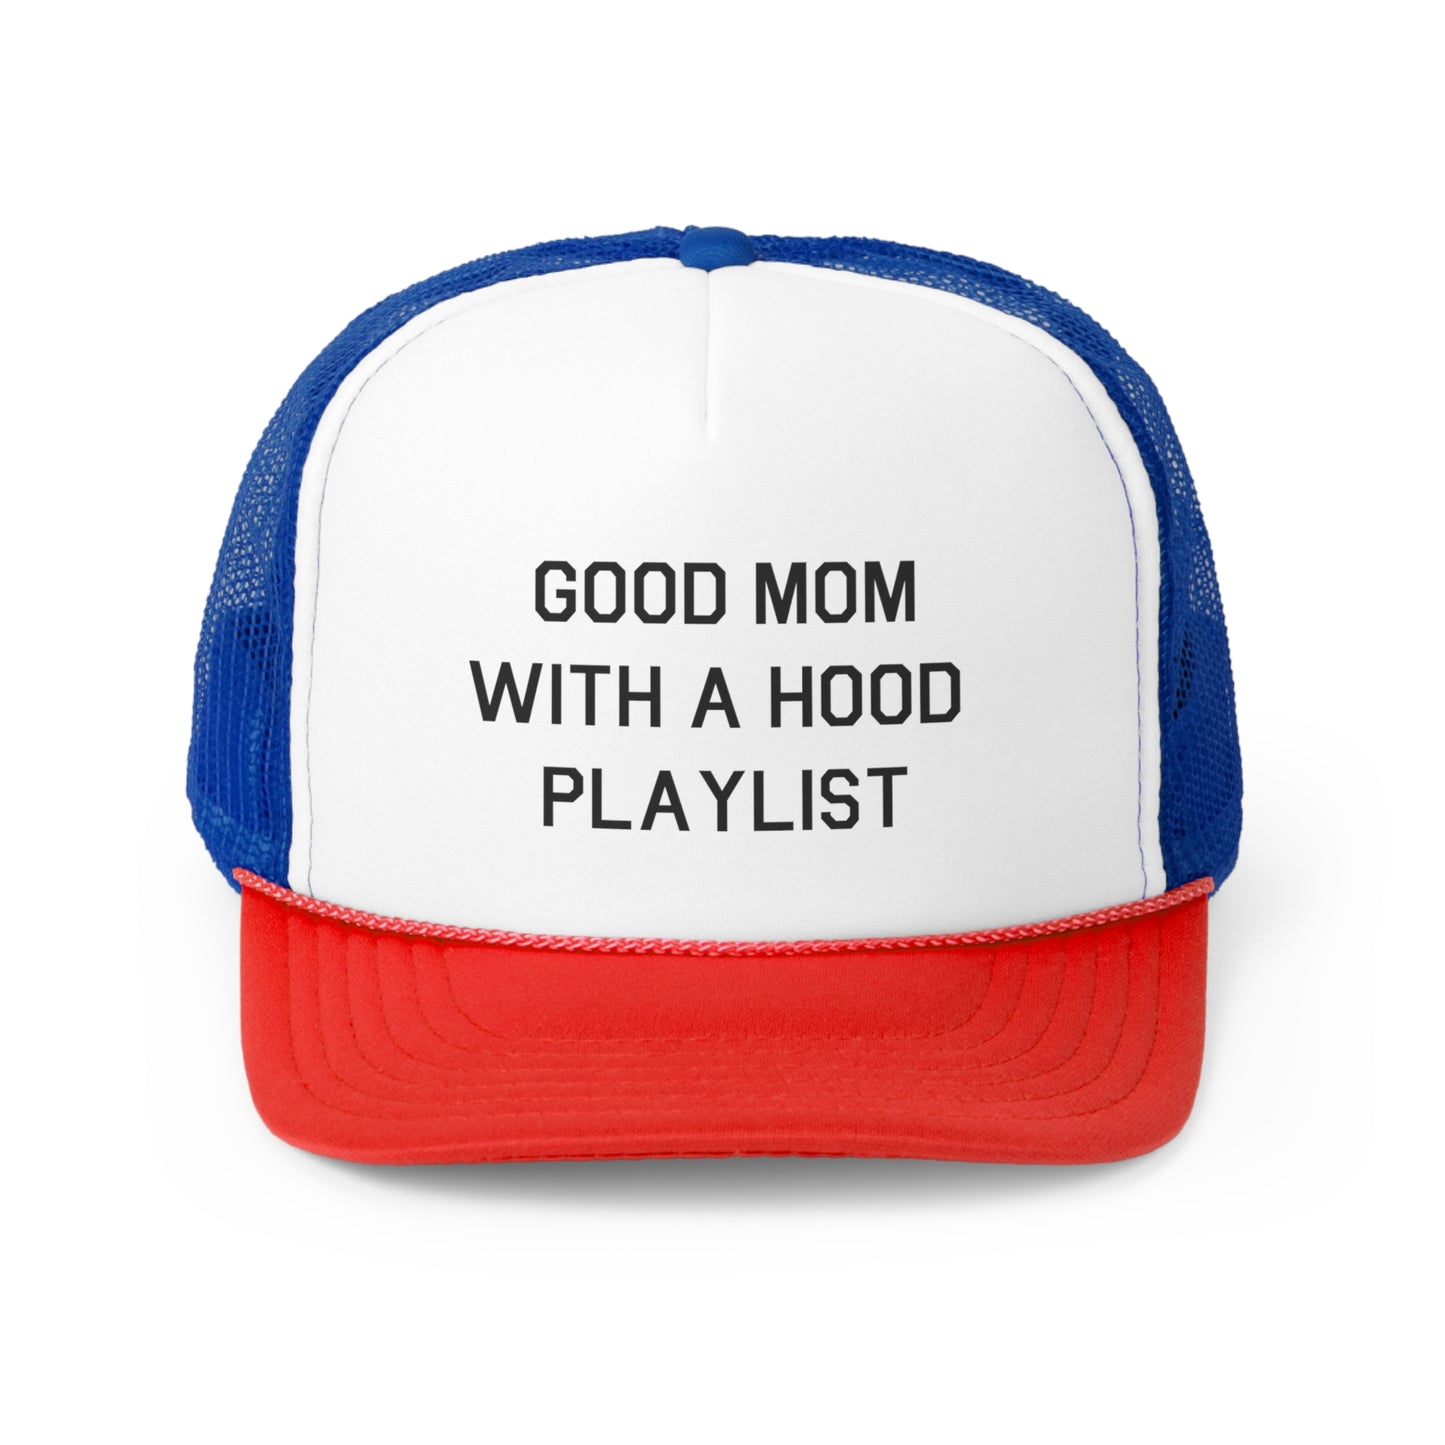 Good Mom With A Hood Playlist Snapback Trucker Hat Great gift for a Good Mom With A Hood Playlist